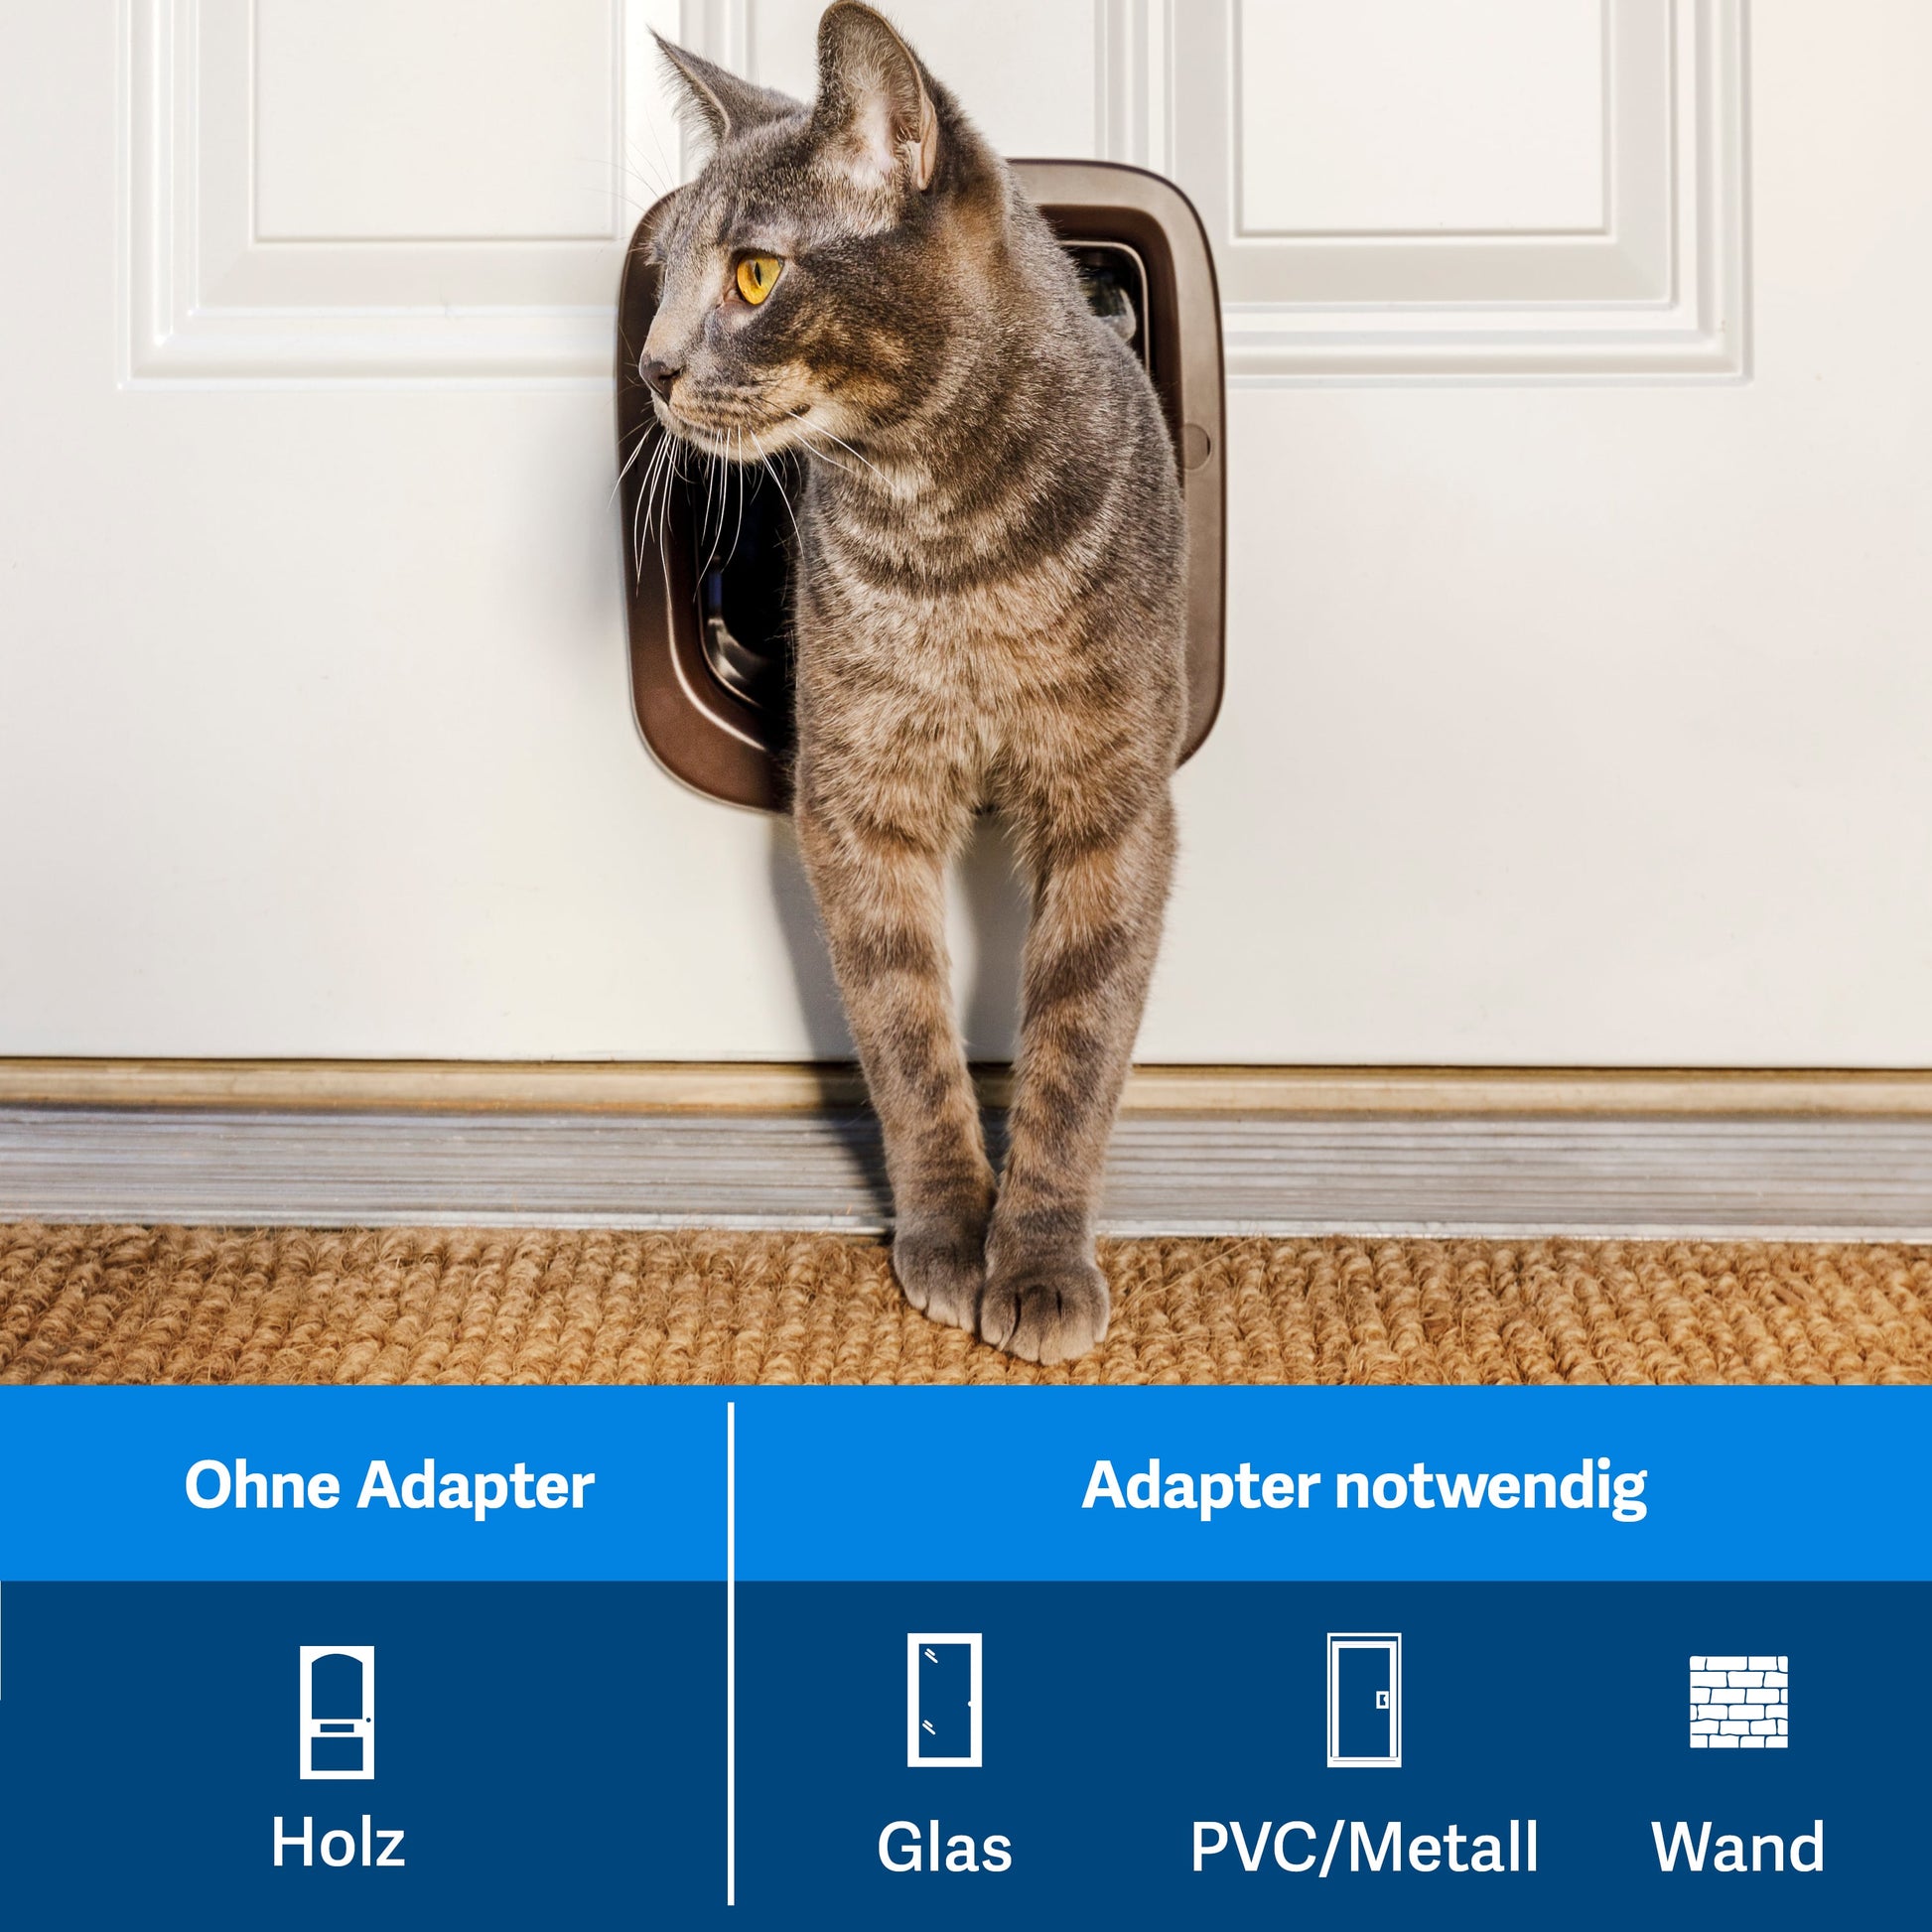 PetSafe® Katzenklappe mit manueller Verriegelung (weiß)